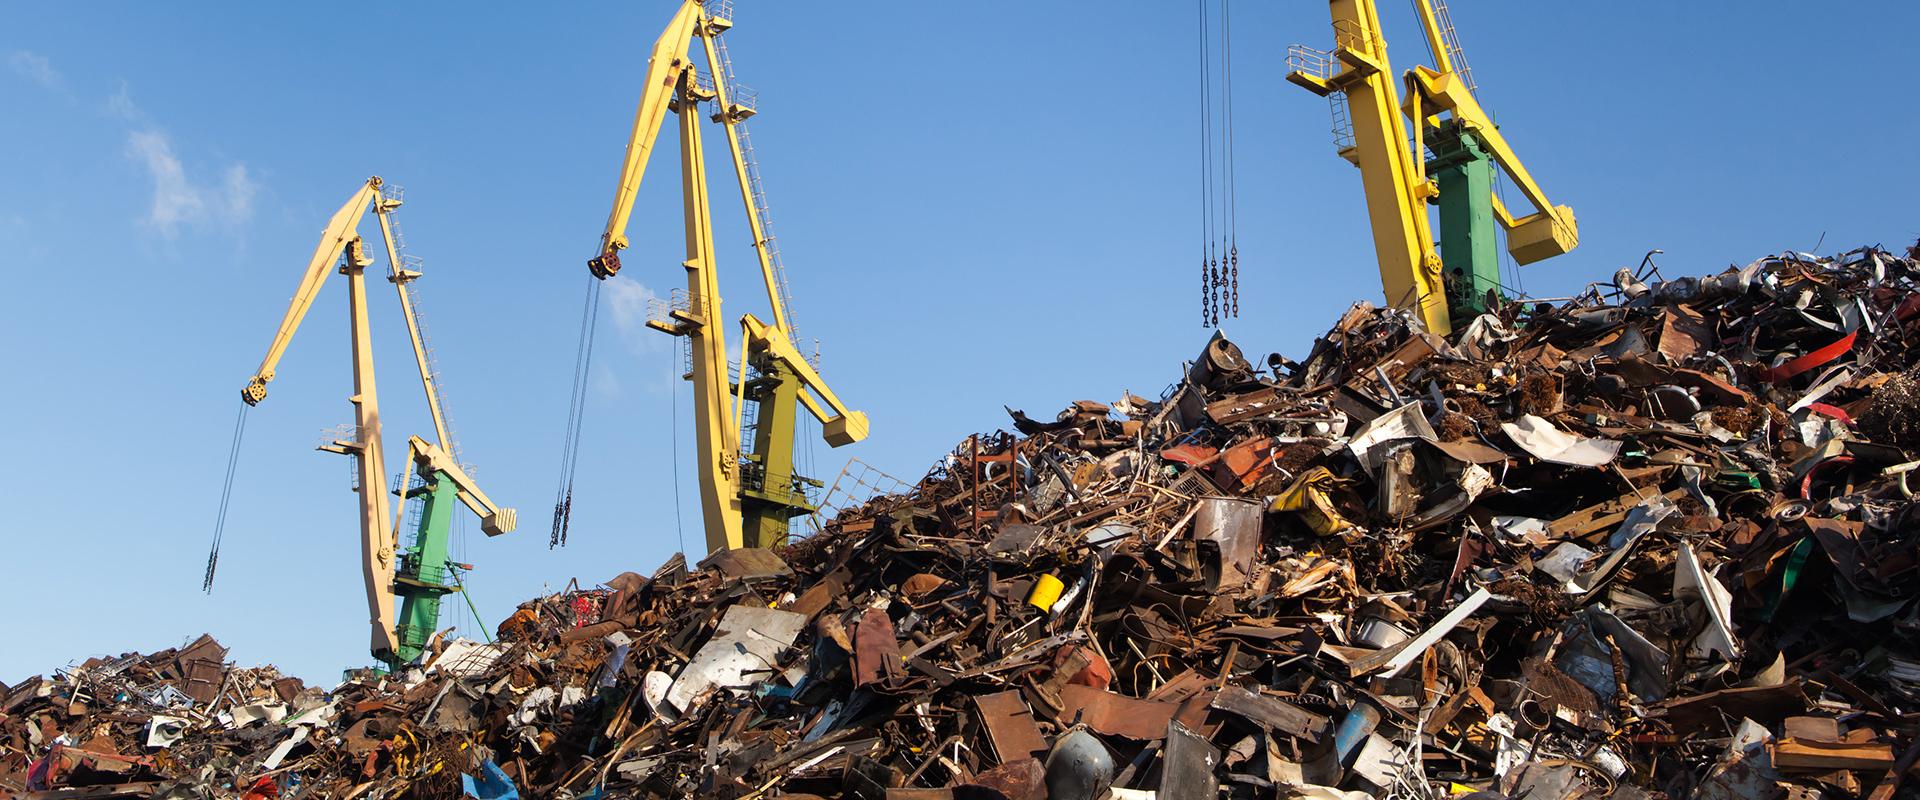 Cranes in a metal dump, Germany